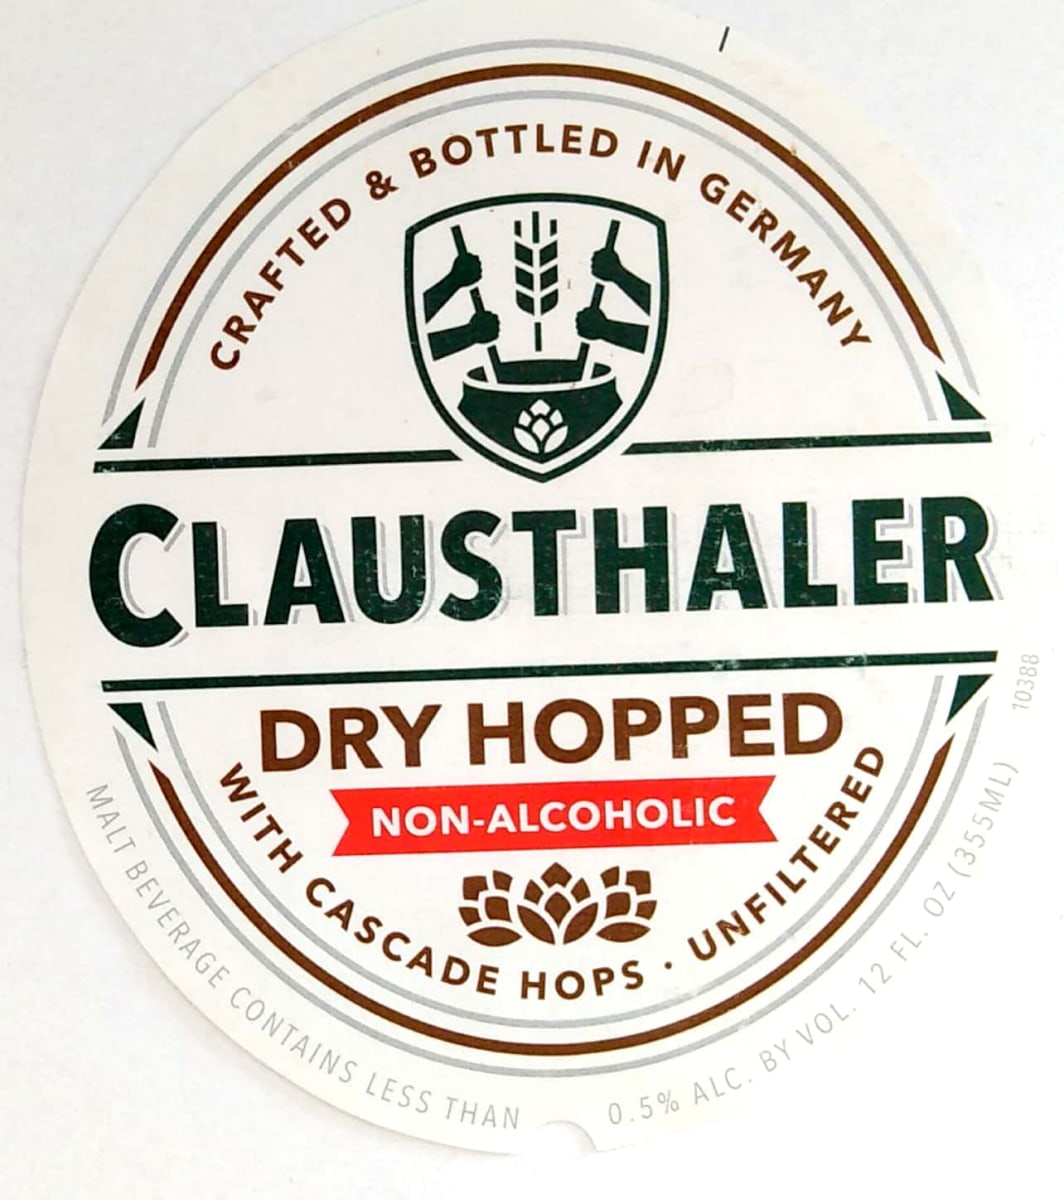 Clausthaler Dry hopped